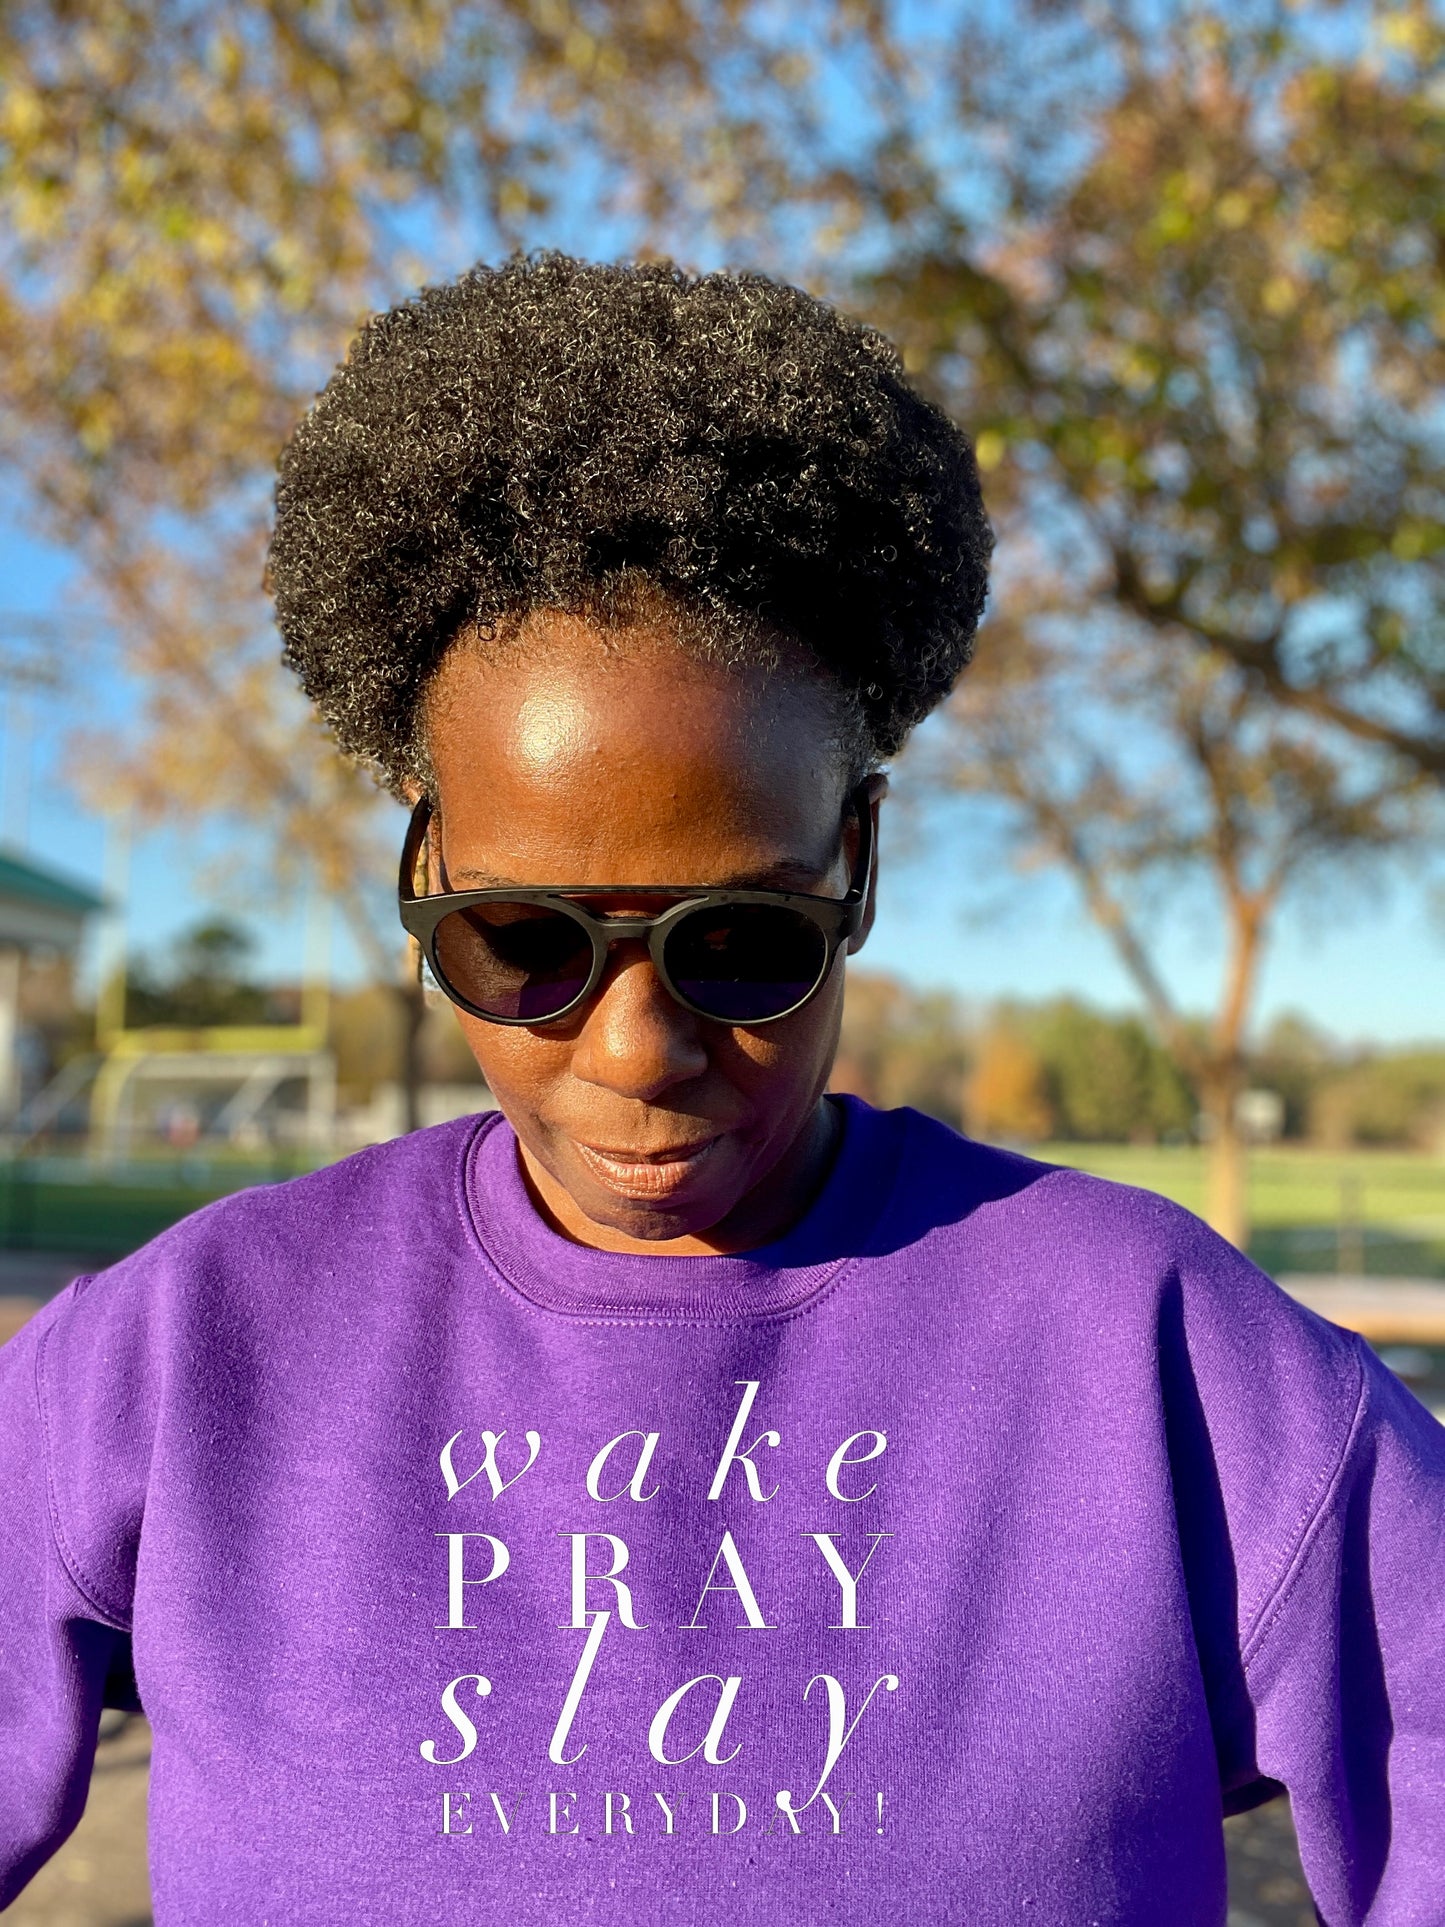 Wake Pray Slay Crewneck Sweatshirt